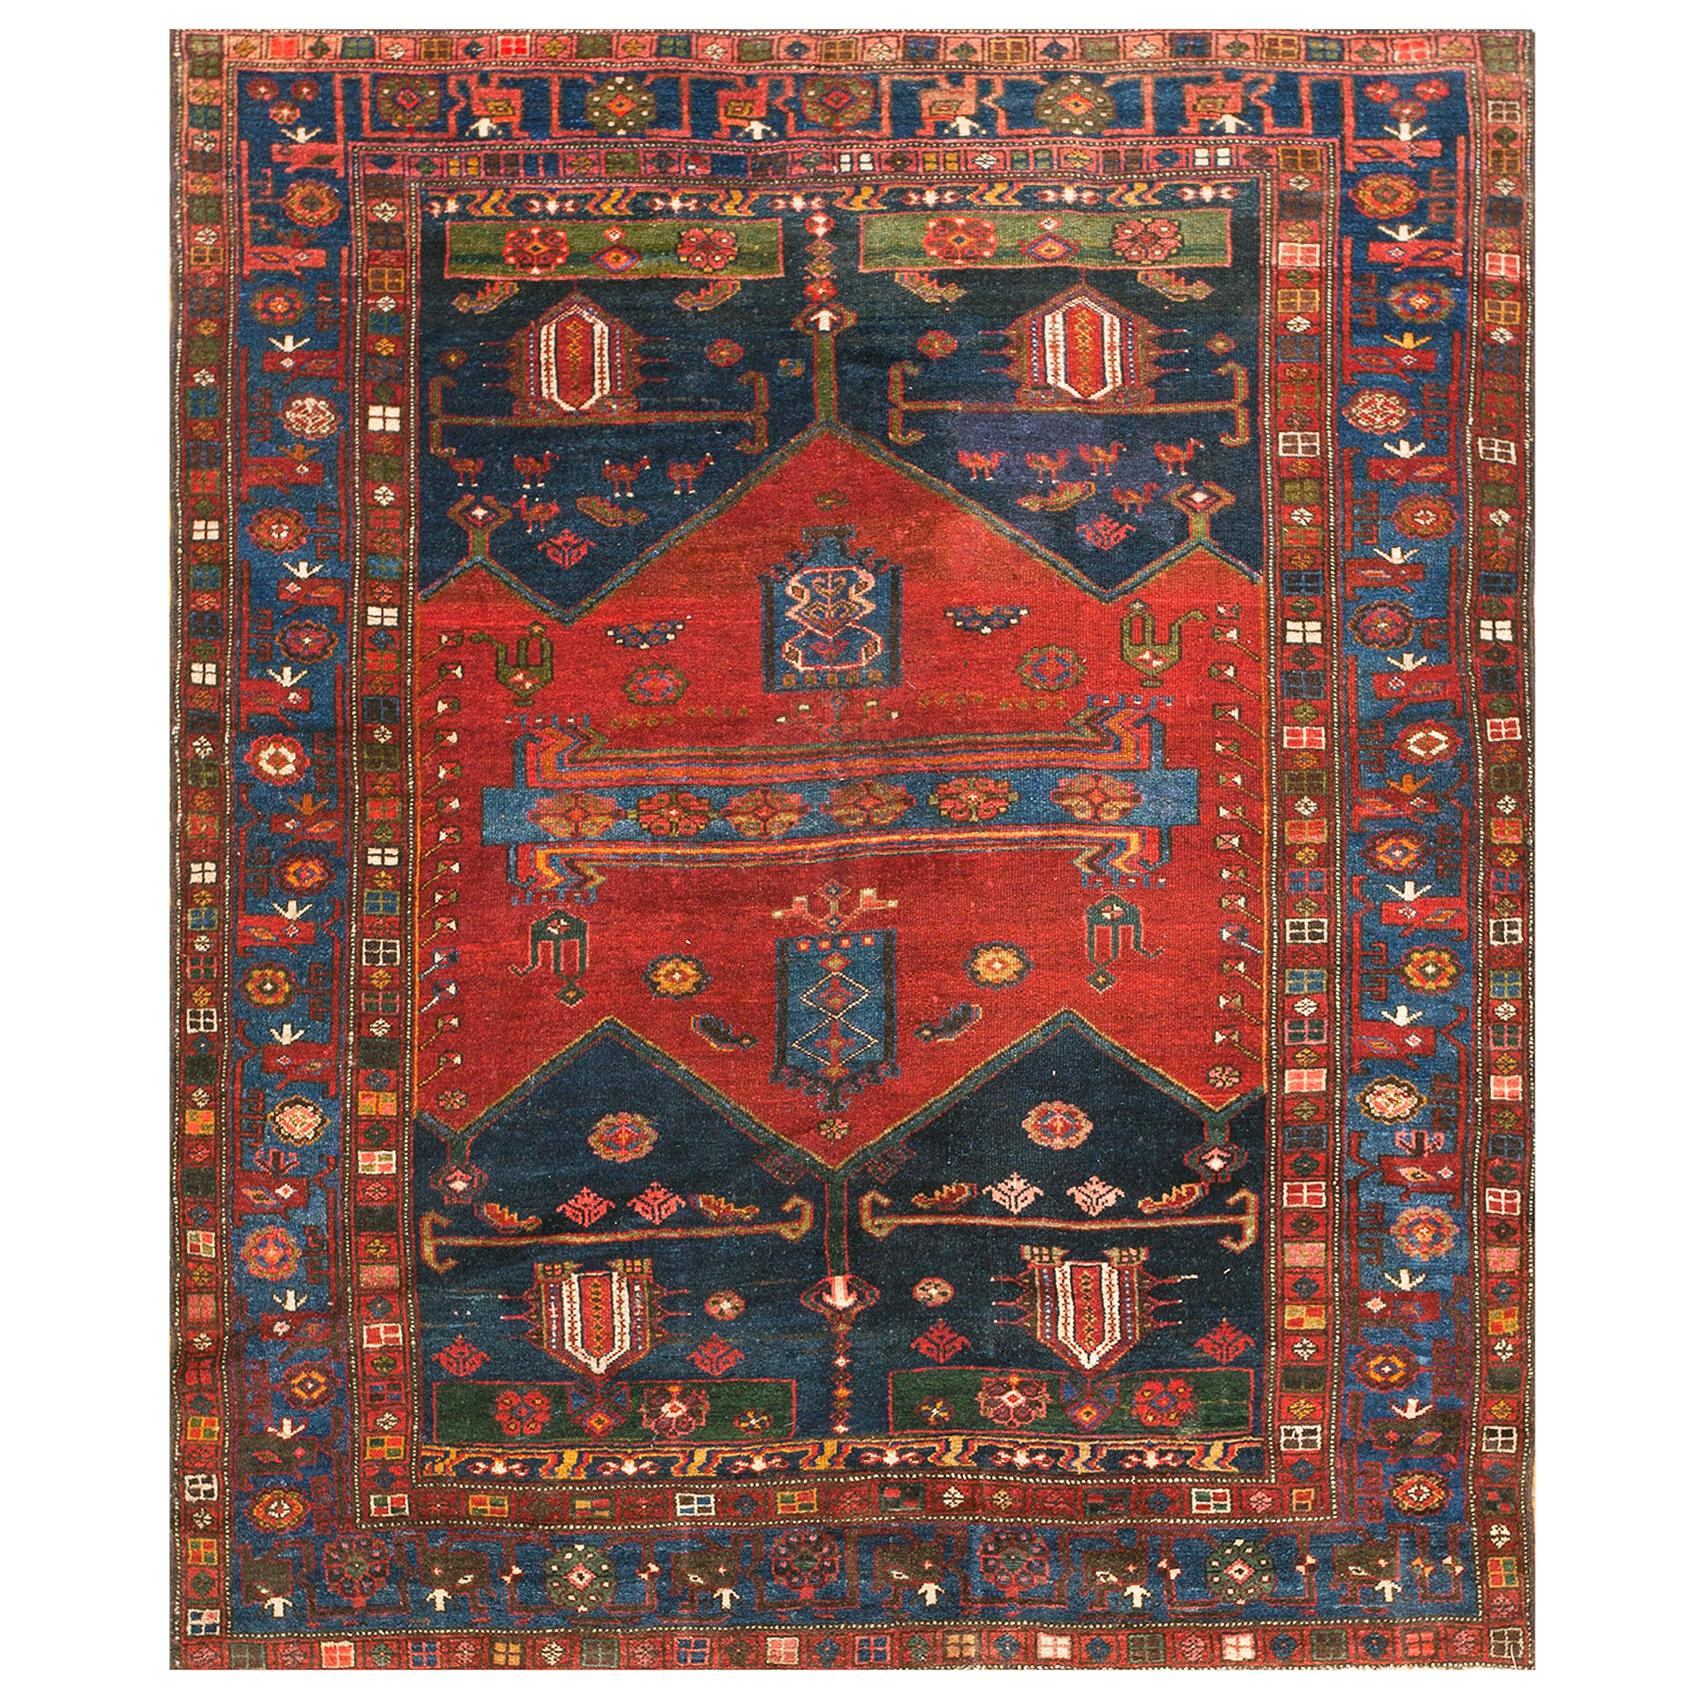 Early 20th Century Persian Malayer " Tousirkan " Carpet ( 5' x 6' - 153 x 183 )